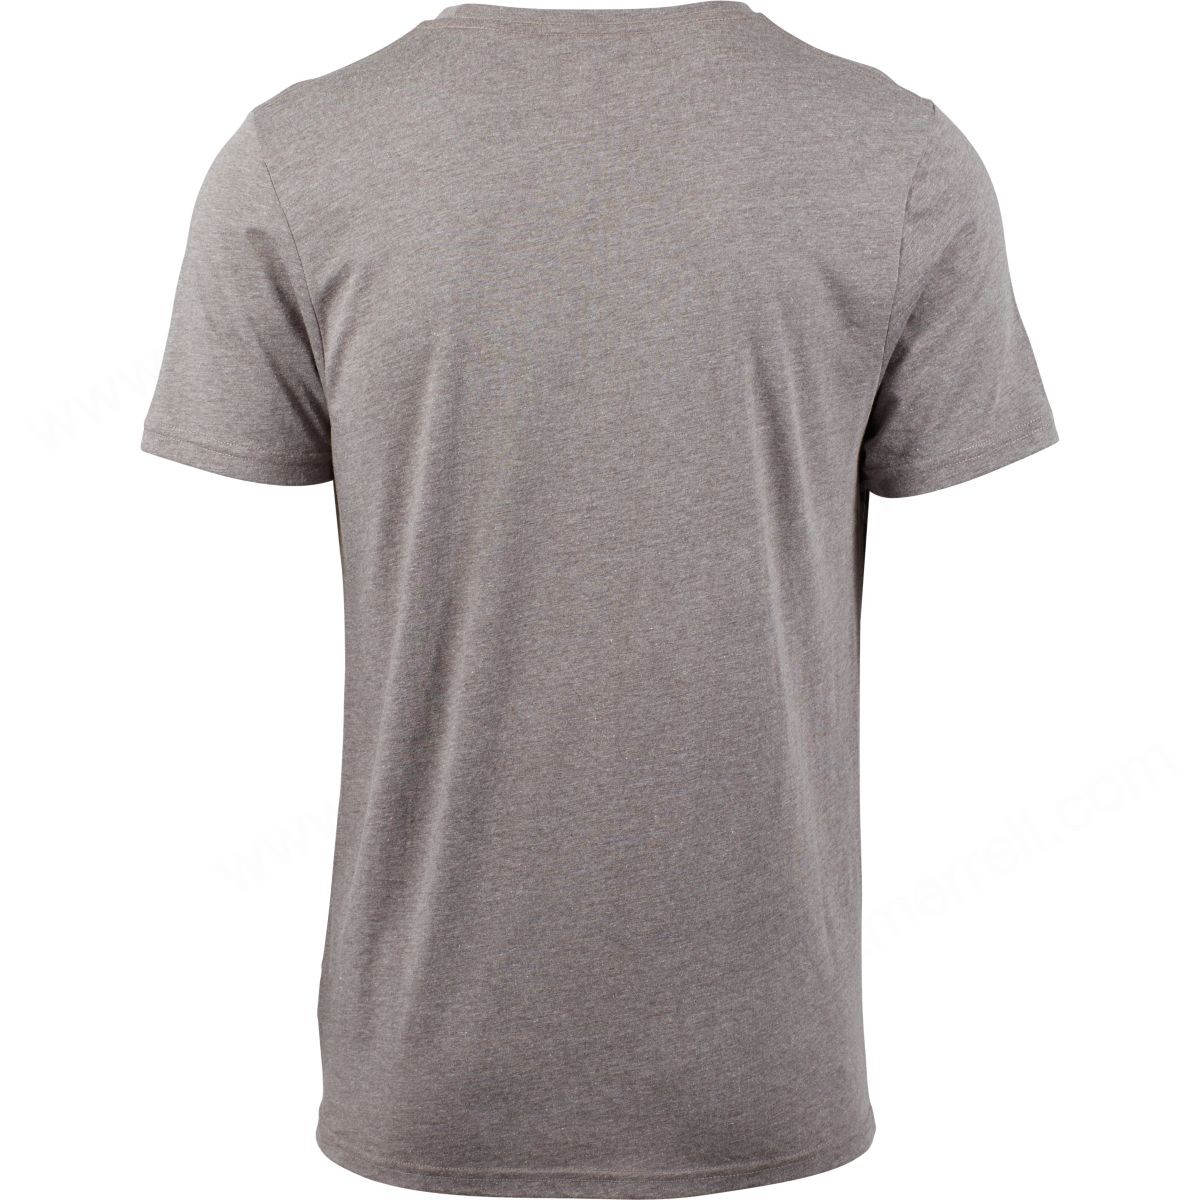 Merrell Mens's Geotic Shirt Manganese - -1